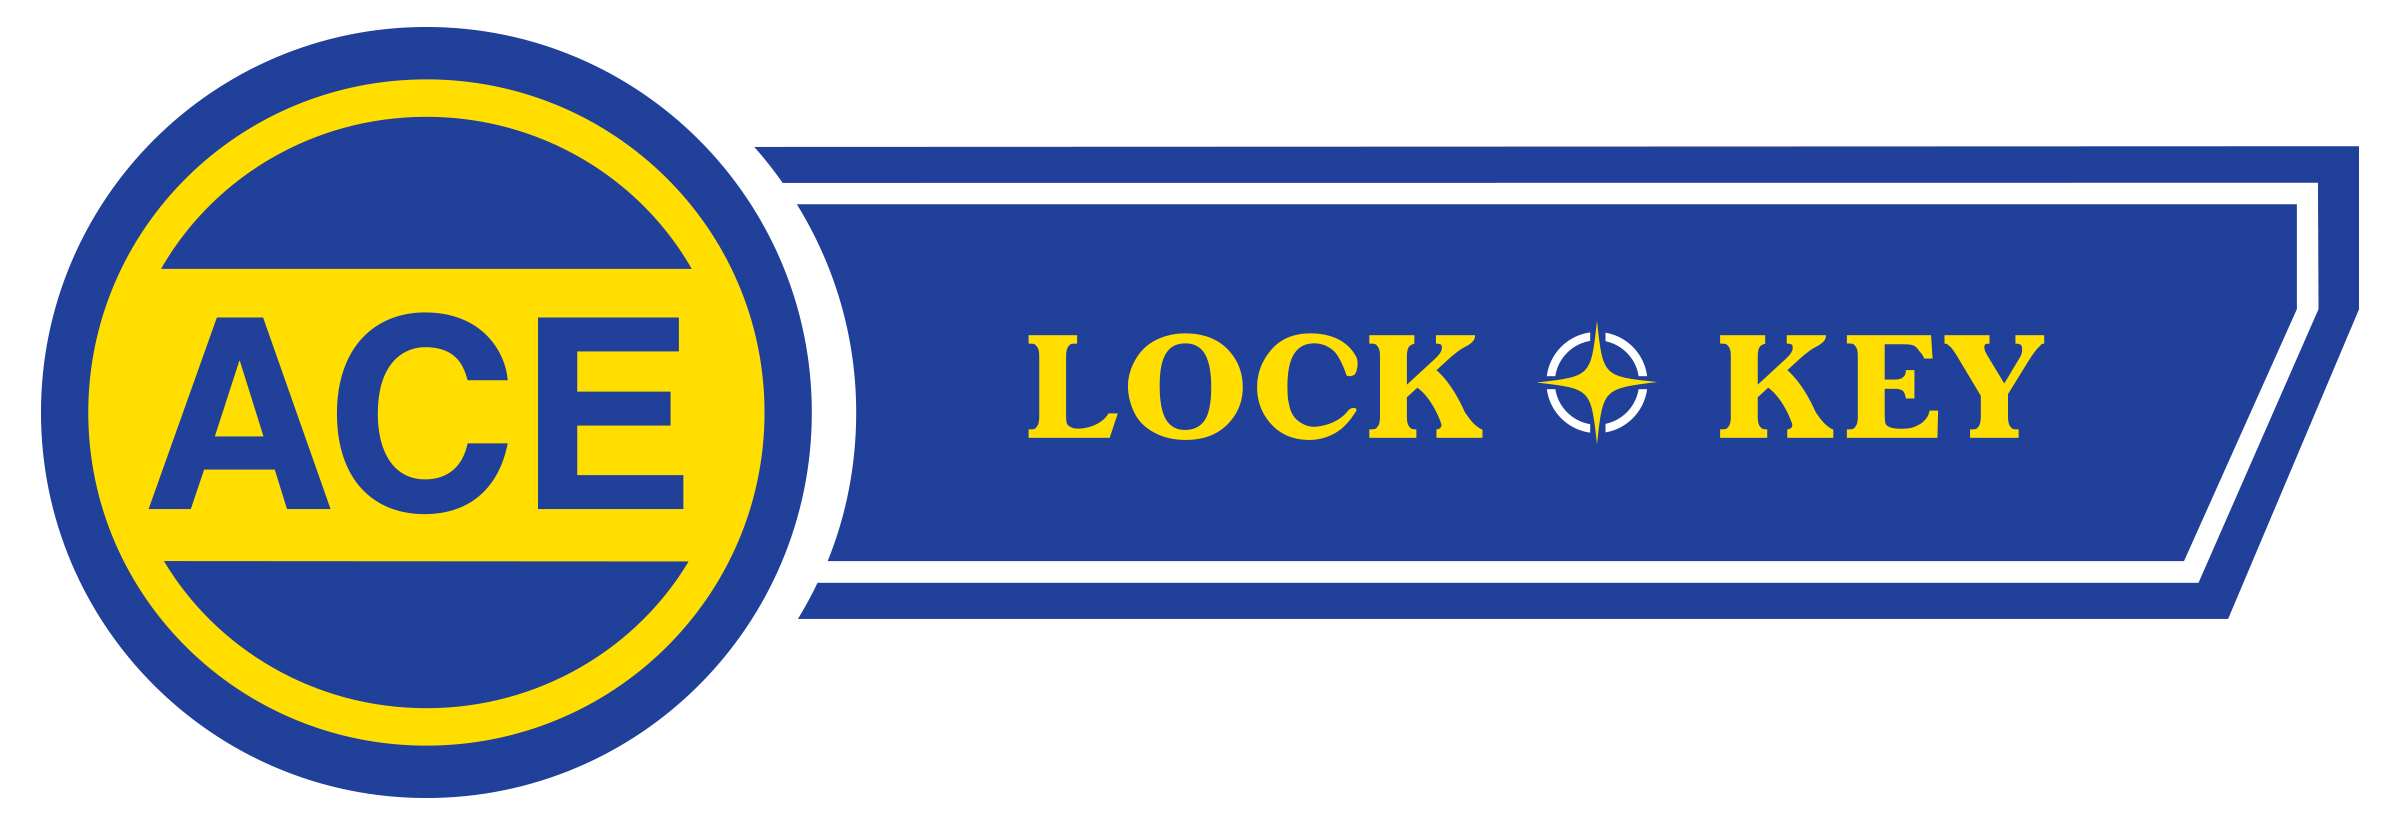 Ace Lock & Key, Inc